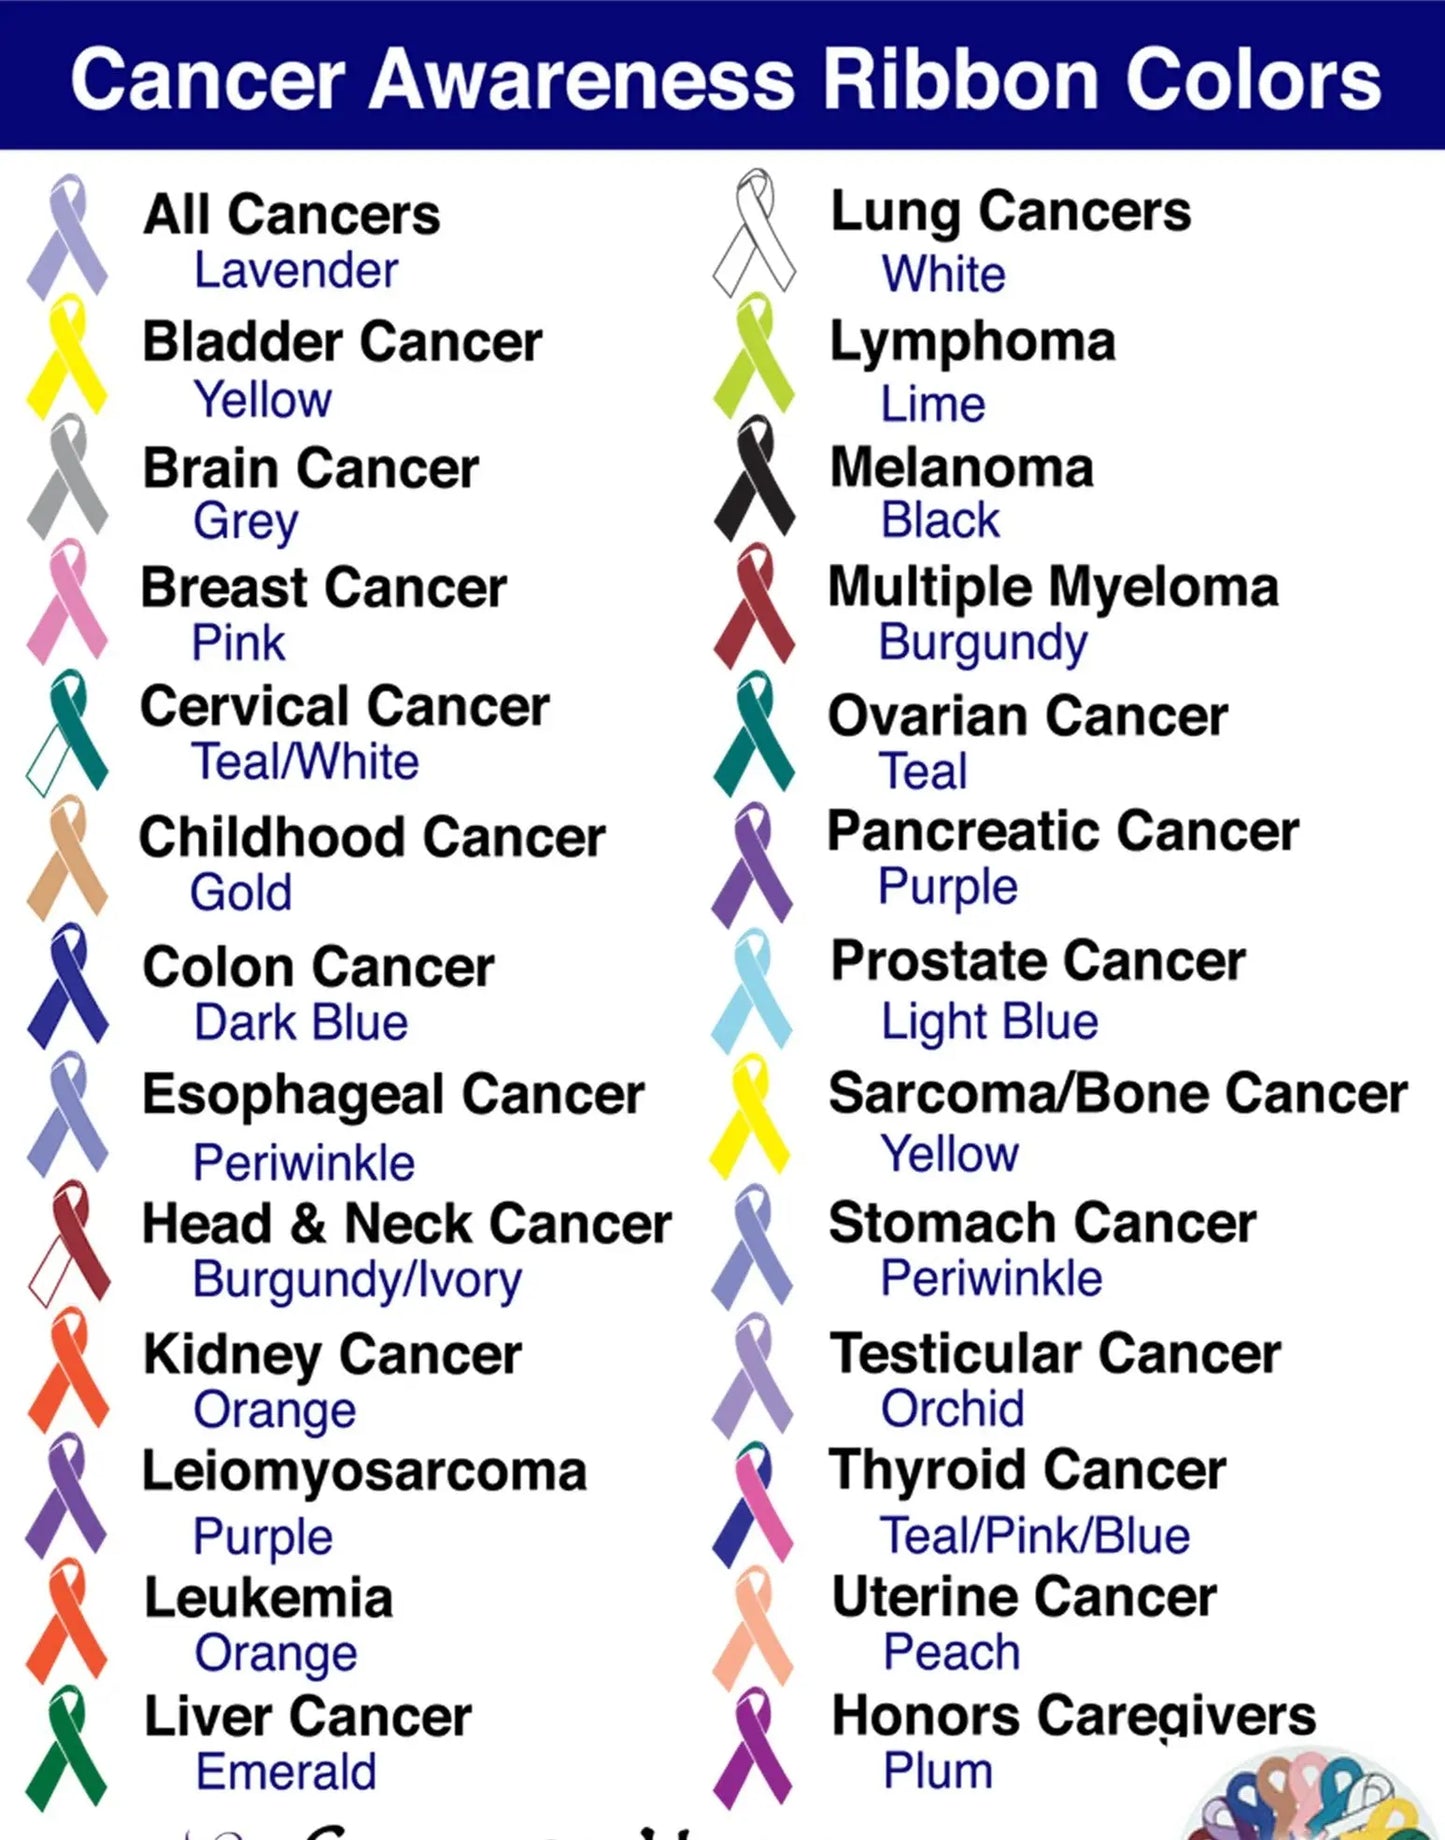 Awareness purple enamel ribbon charm Earrings - Image #4